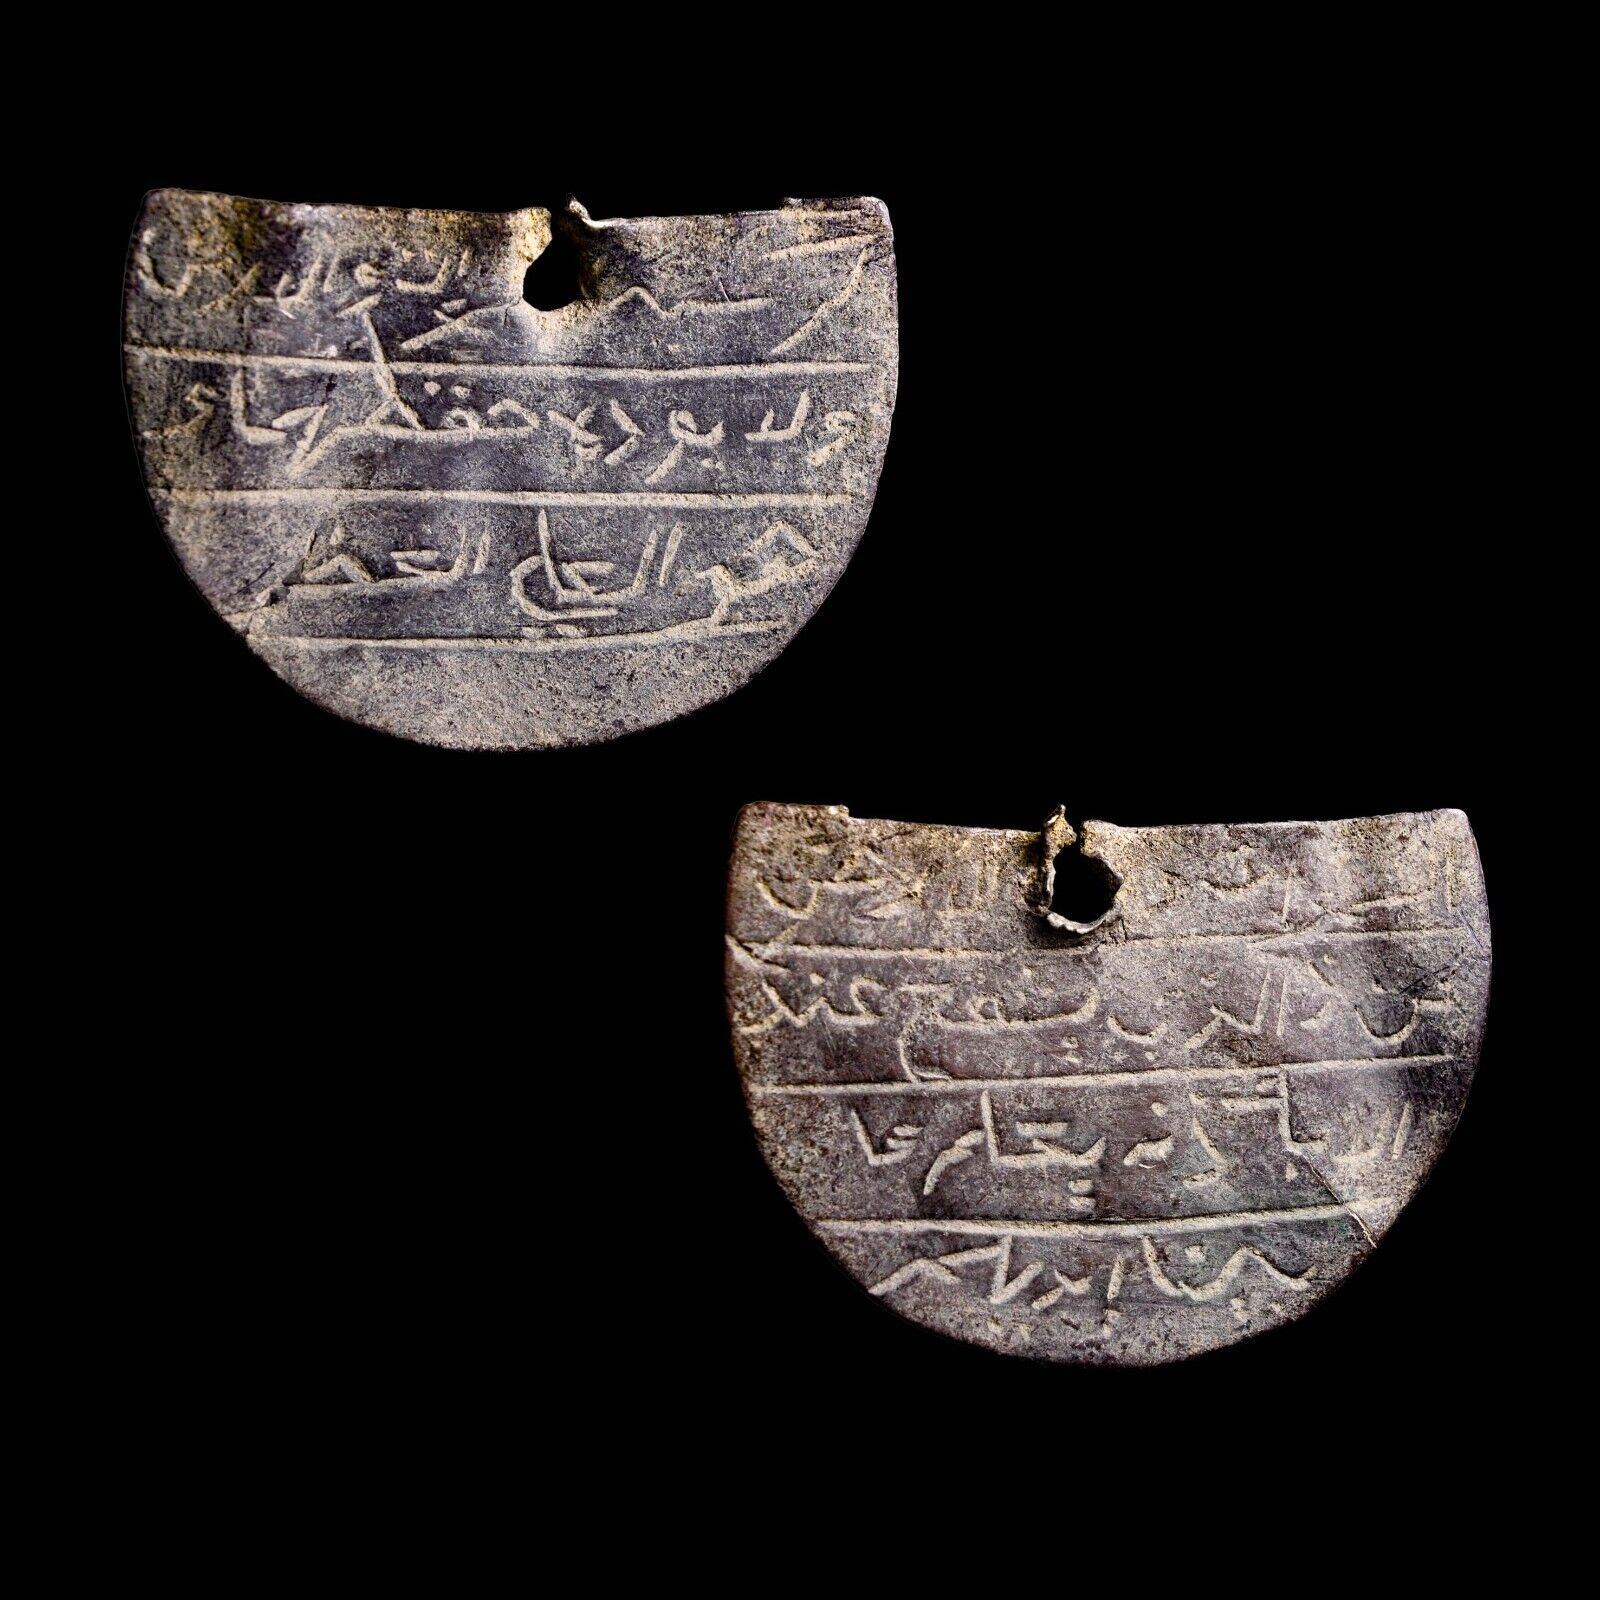 RARE Medieval Islamic Magic Artifact Antiquity Talisman with Quran Verses